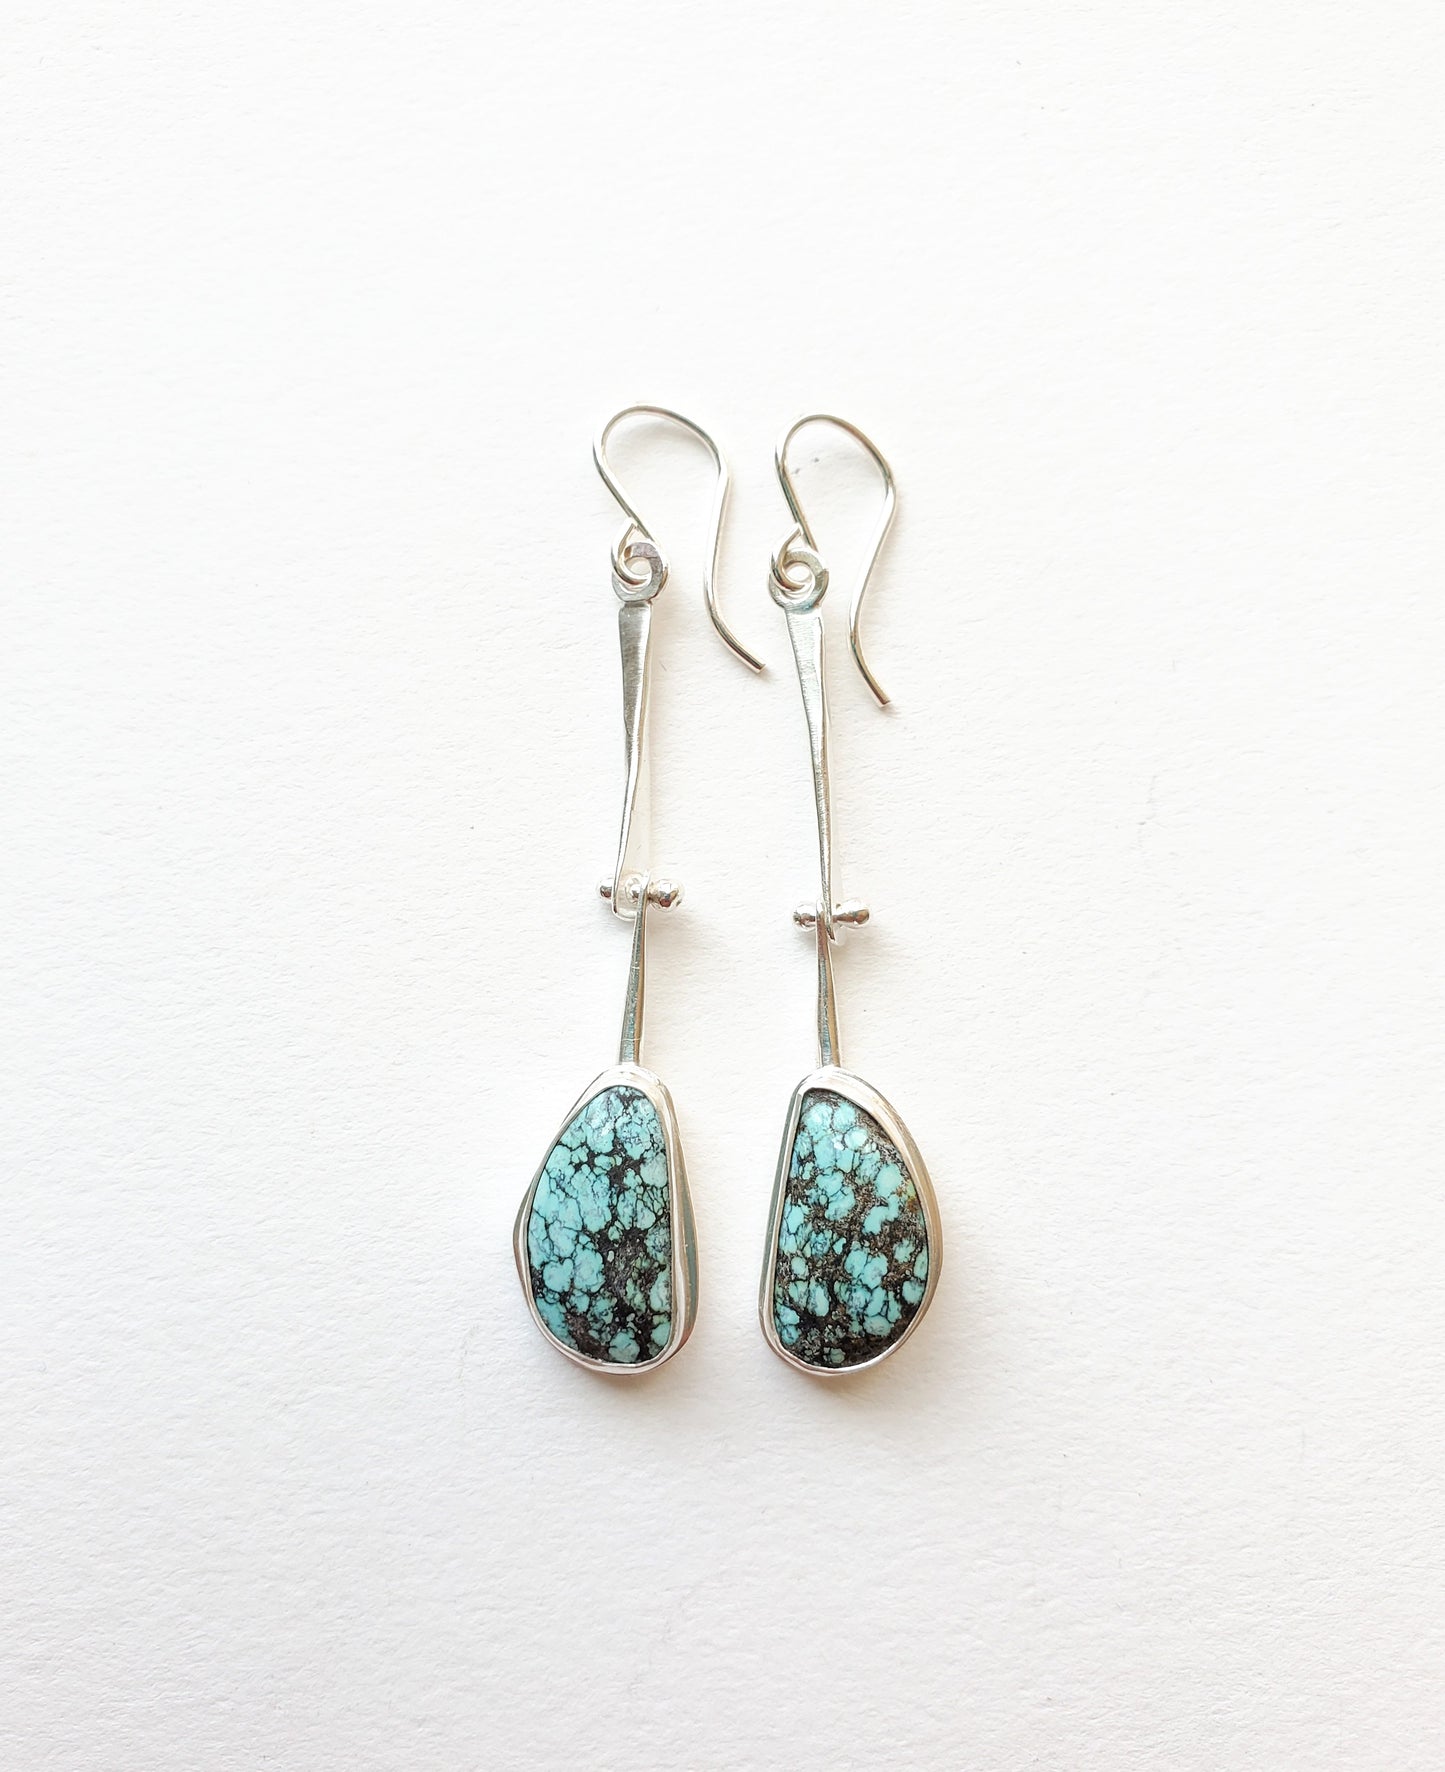 Set Hinge Earrings - Matrix Turquoise